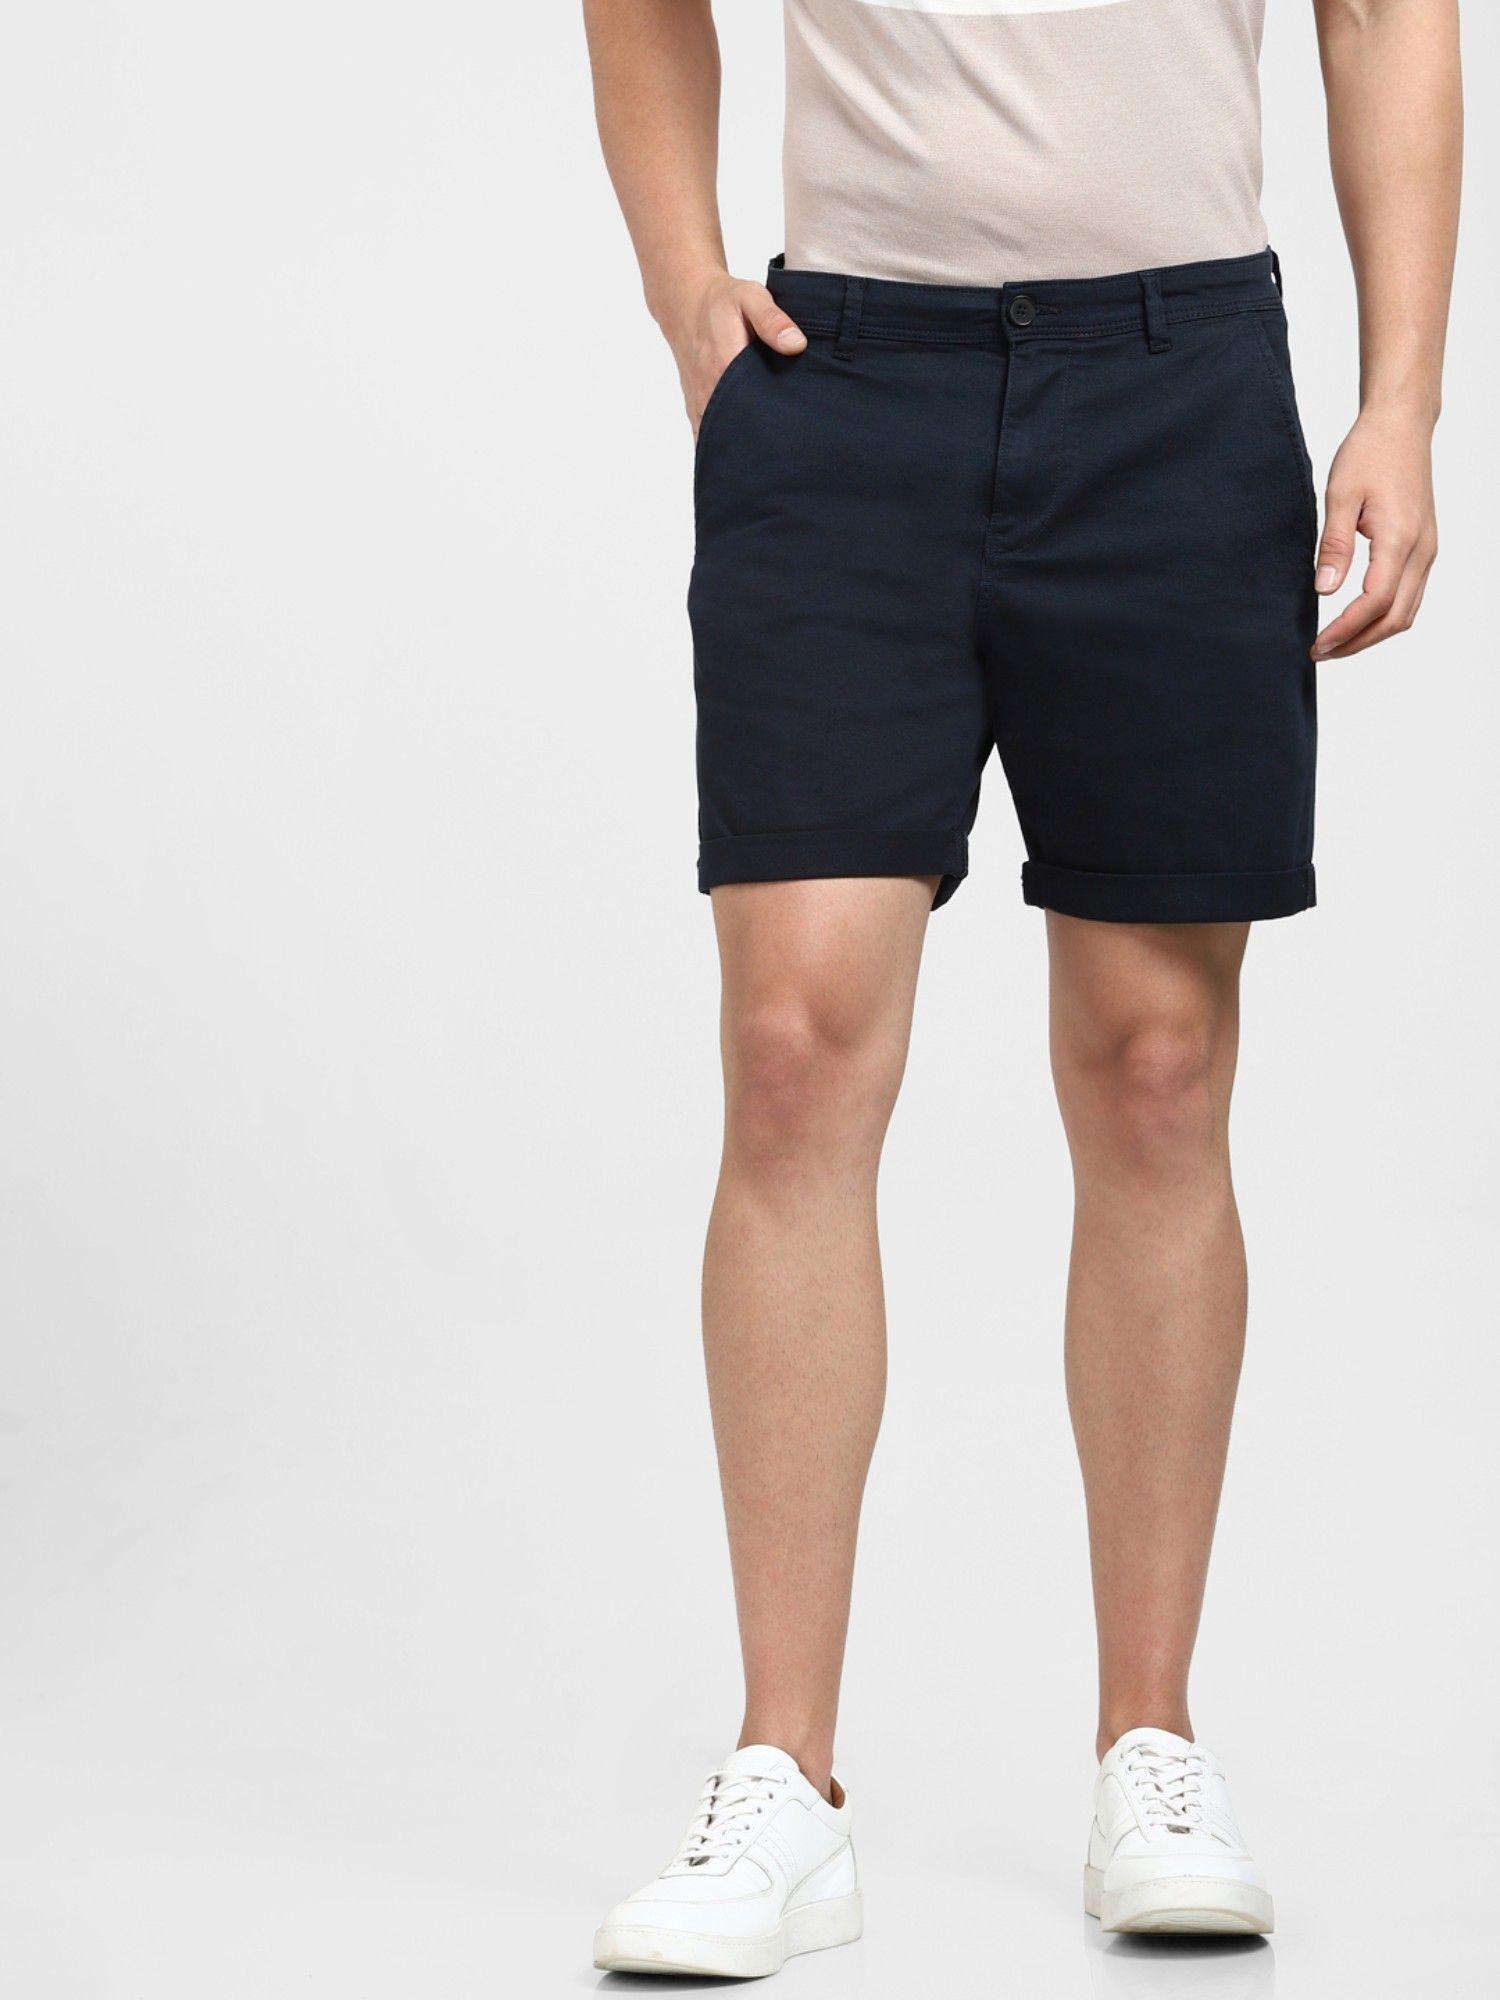 navy blue mid rise shorts